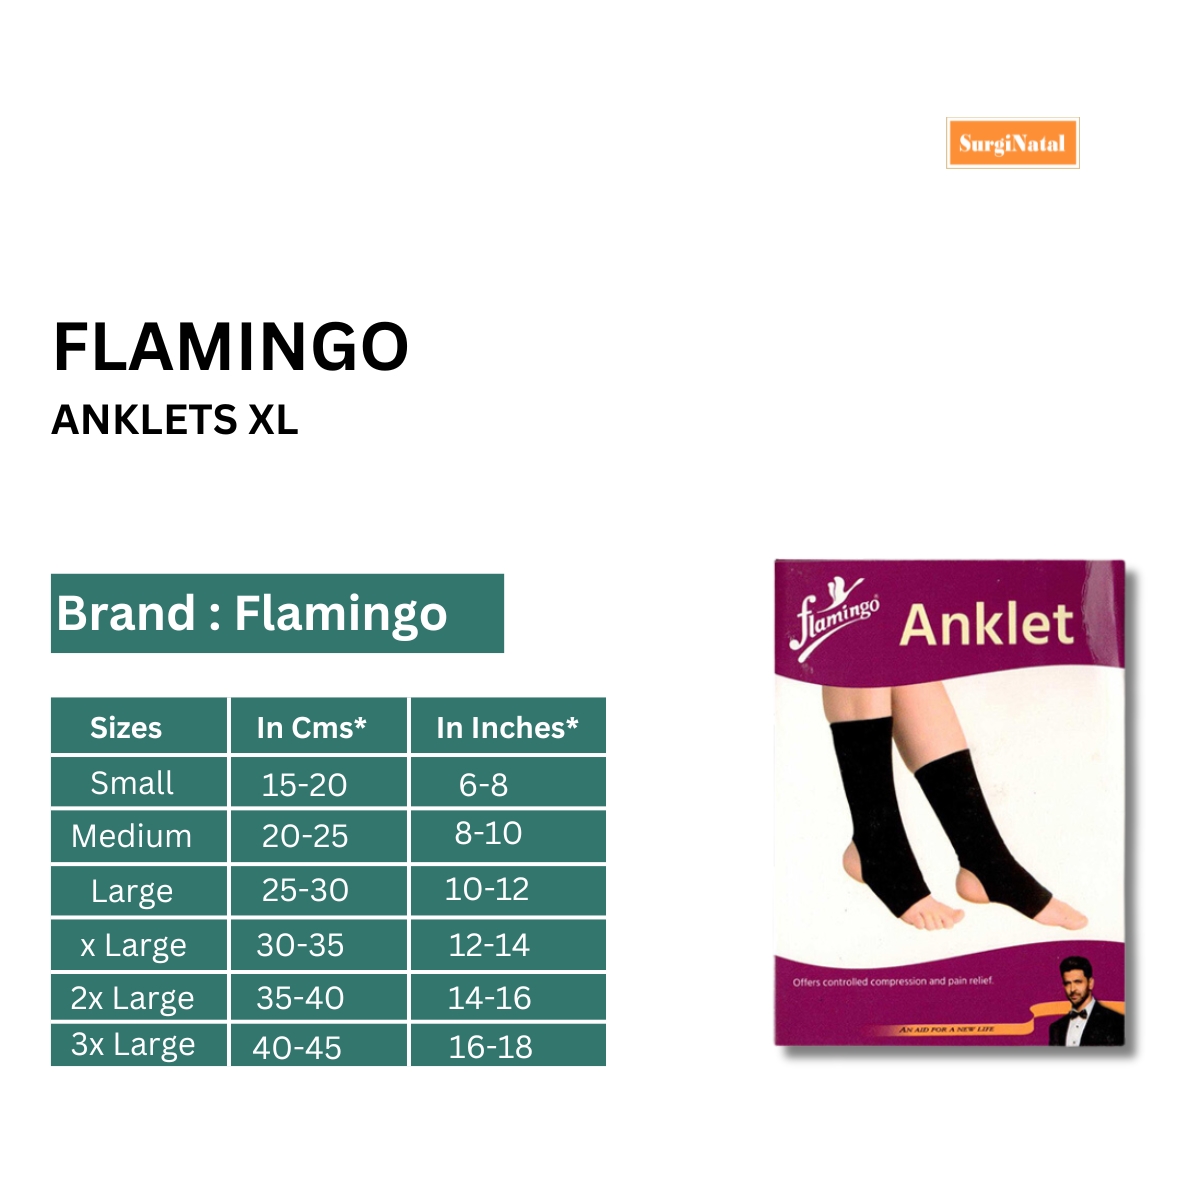 flamingo anklets xl